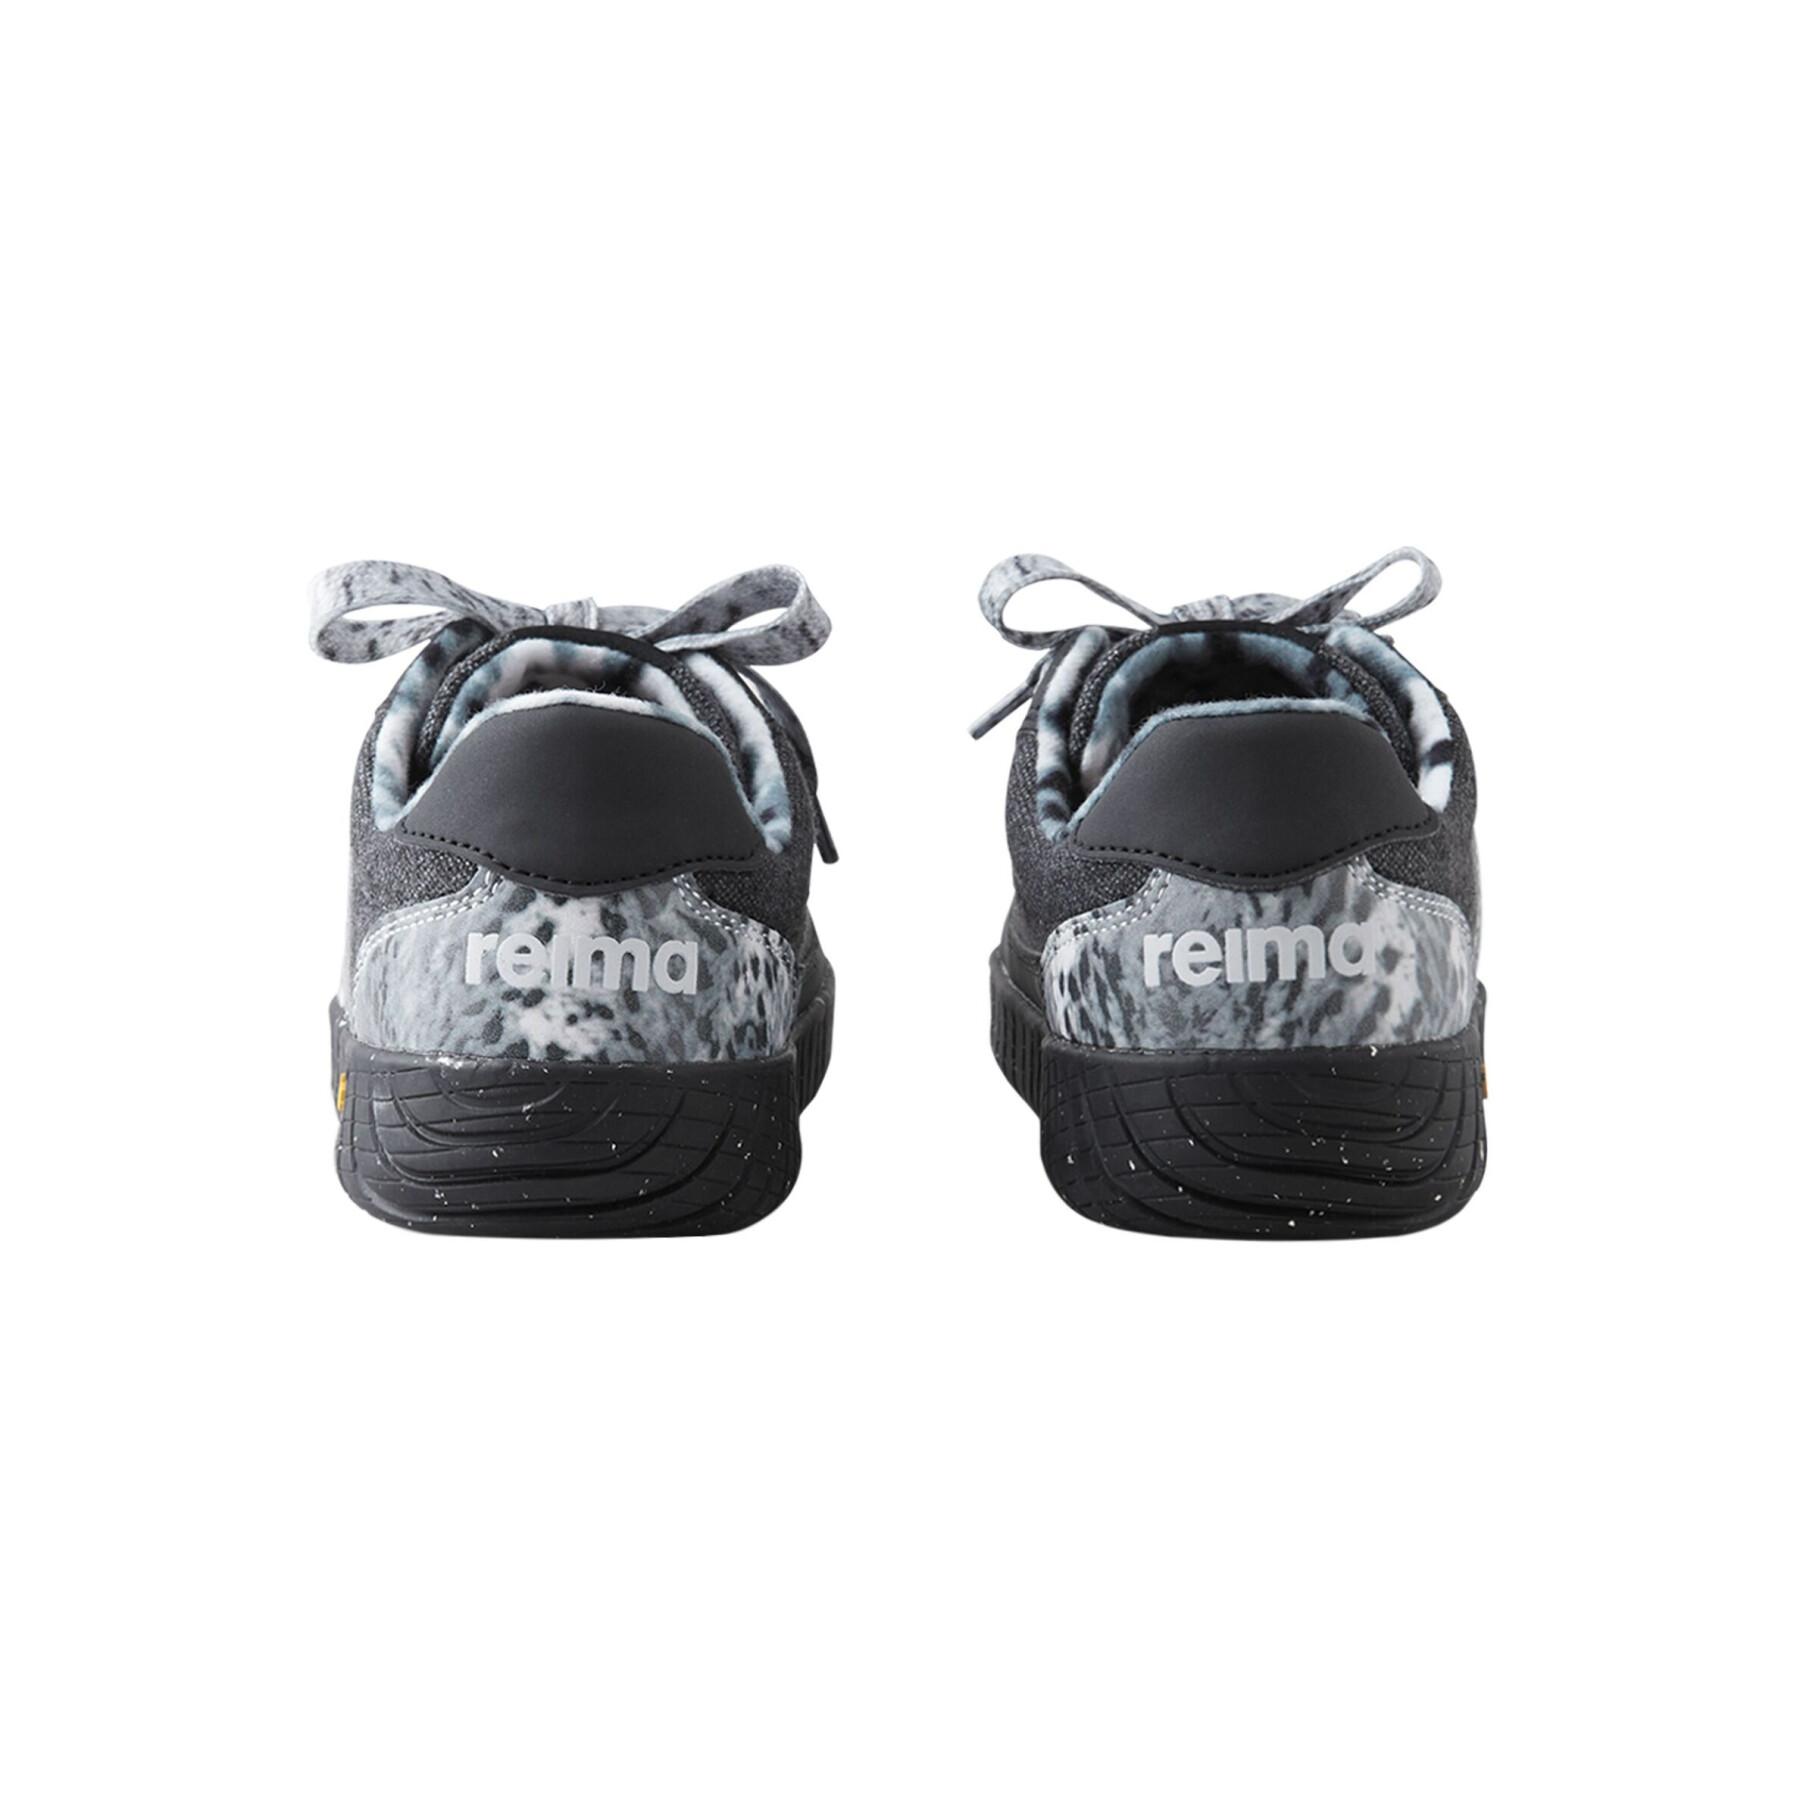 Children's sneakers Reima Ilves